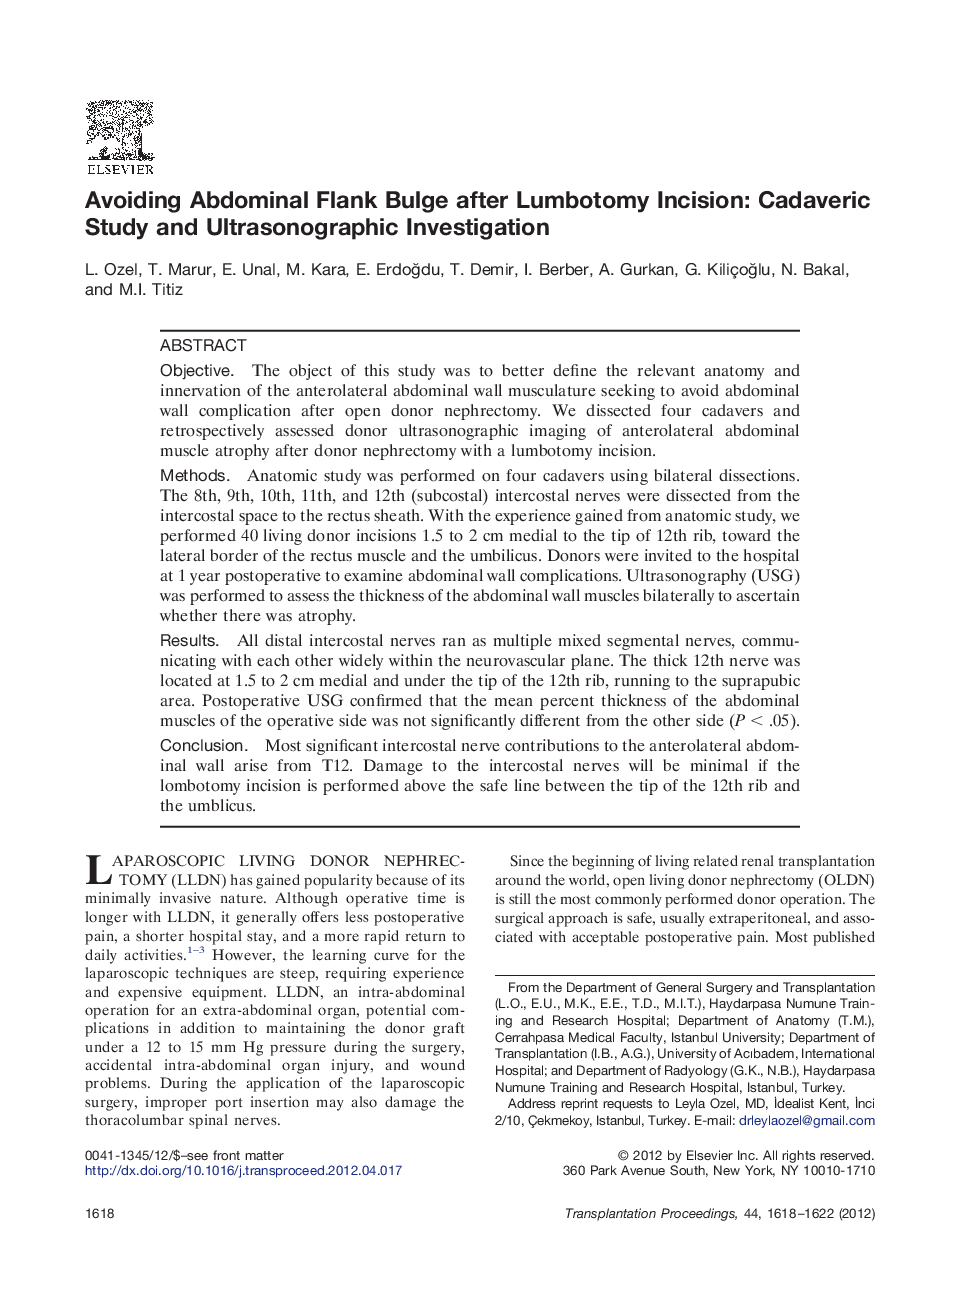 Avoiding Abdominal Flank Bulge after Lumbotomy Incision: Cadaveric Study and Ultrasonographic Investigation